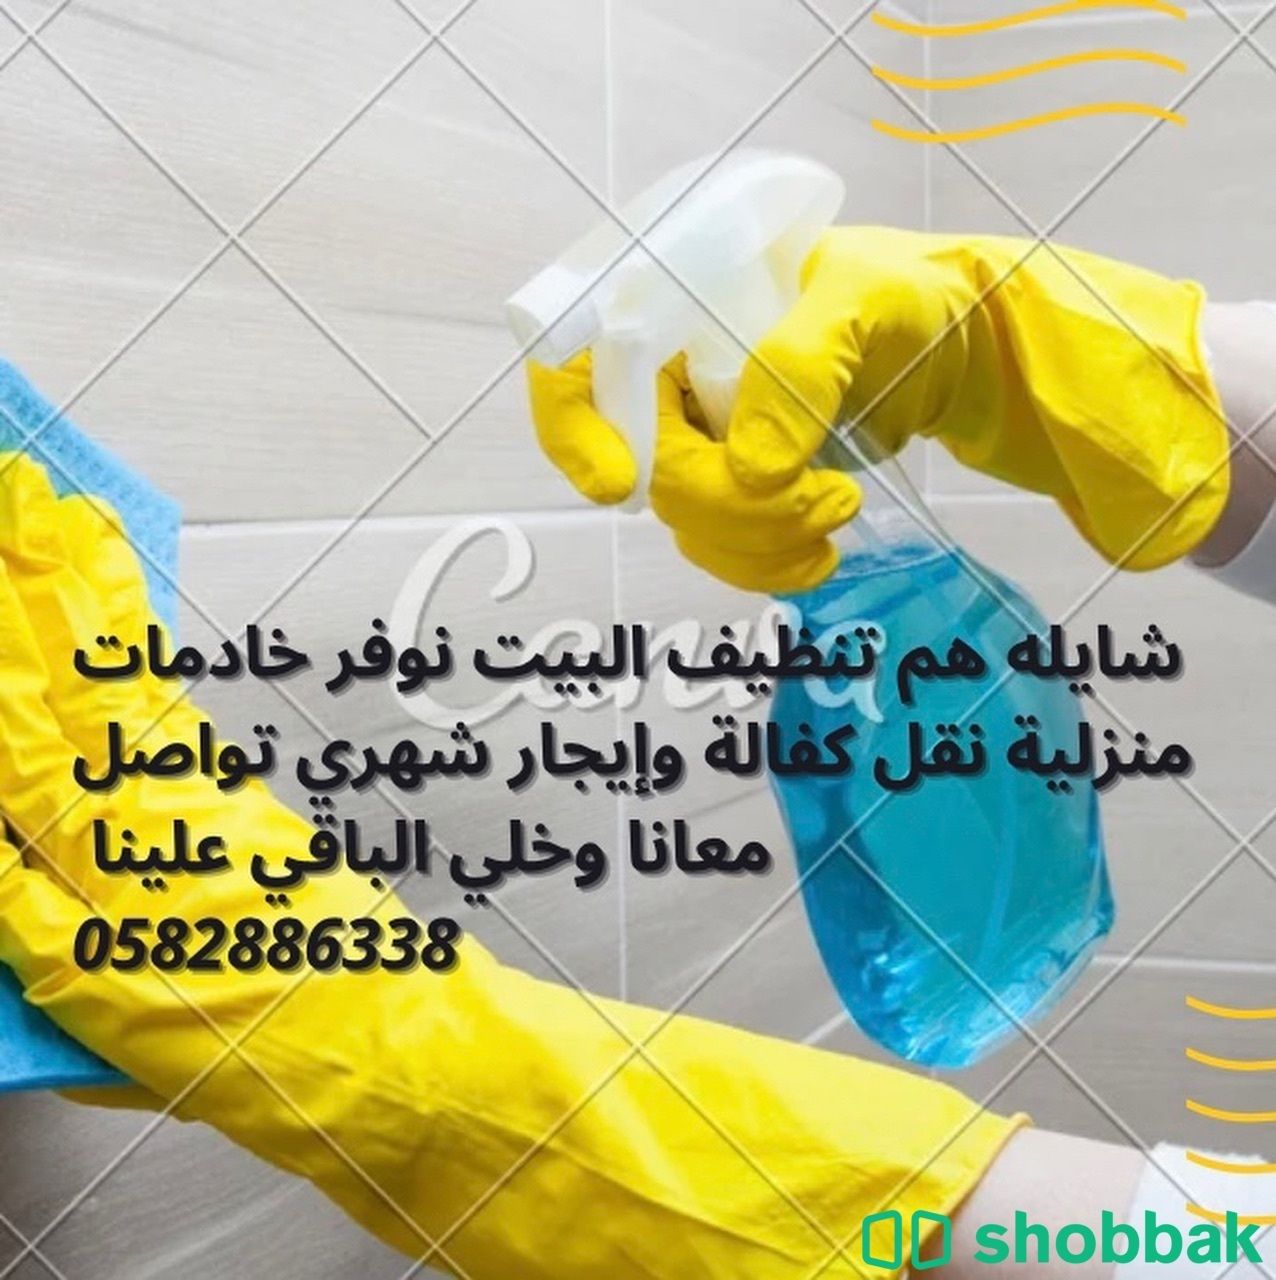 خادمات منزل Shobbak Saudi Arabia